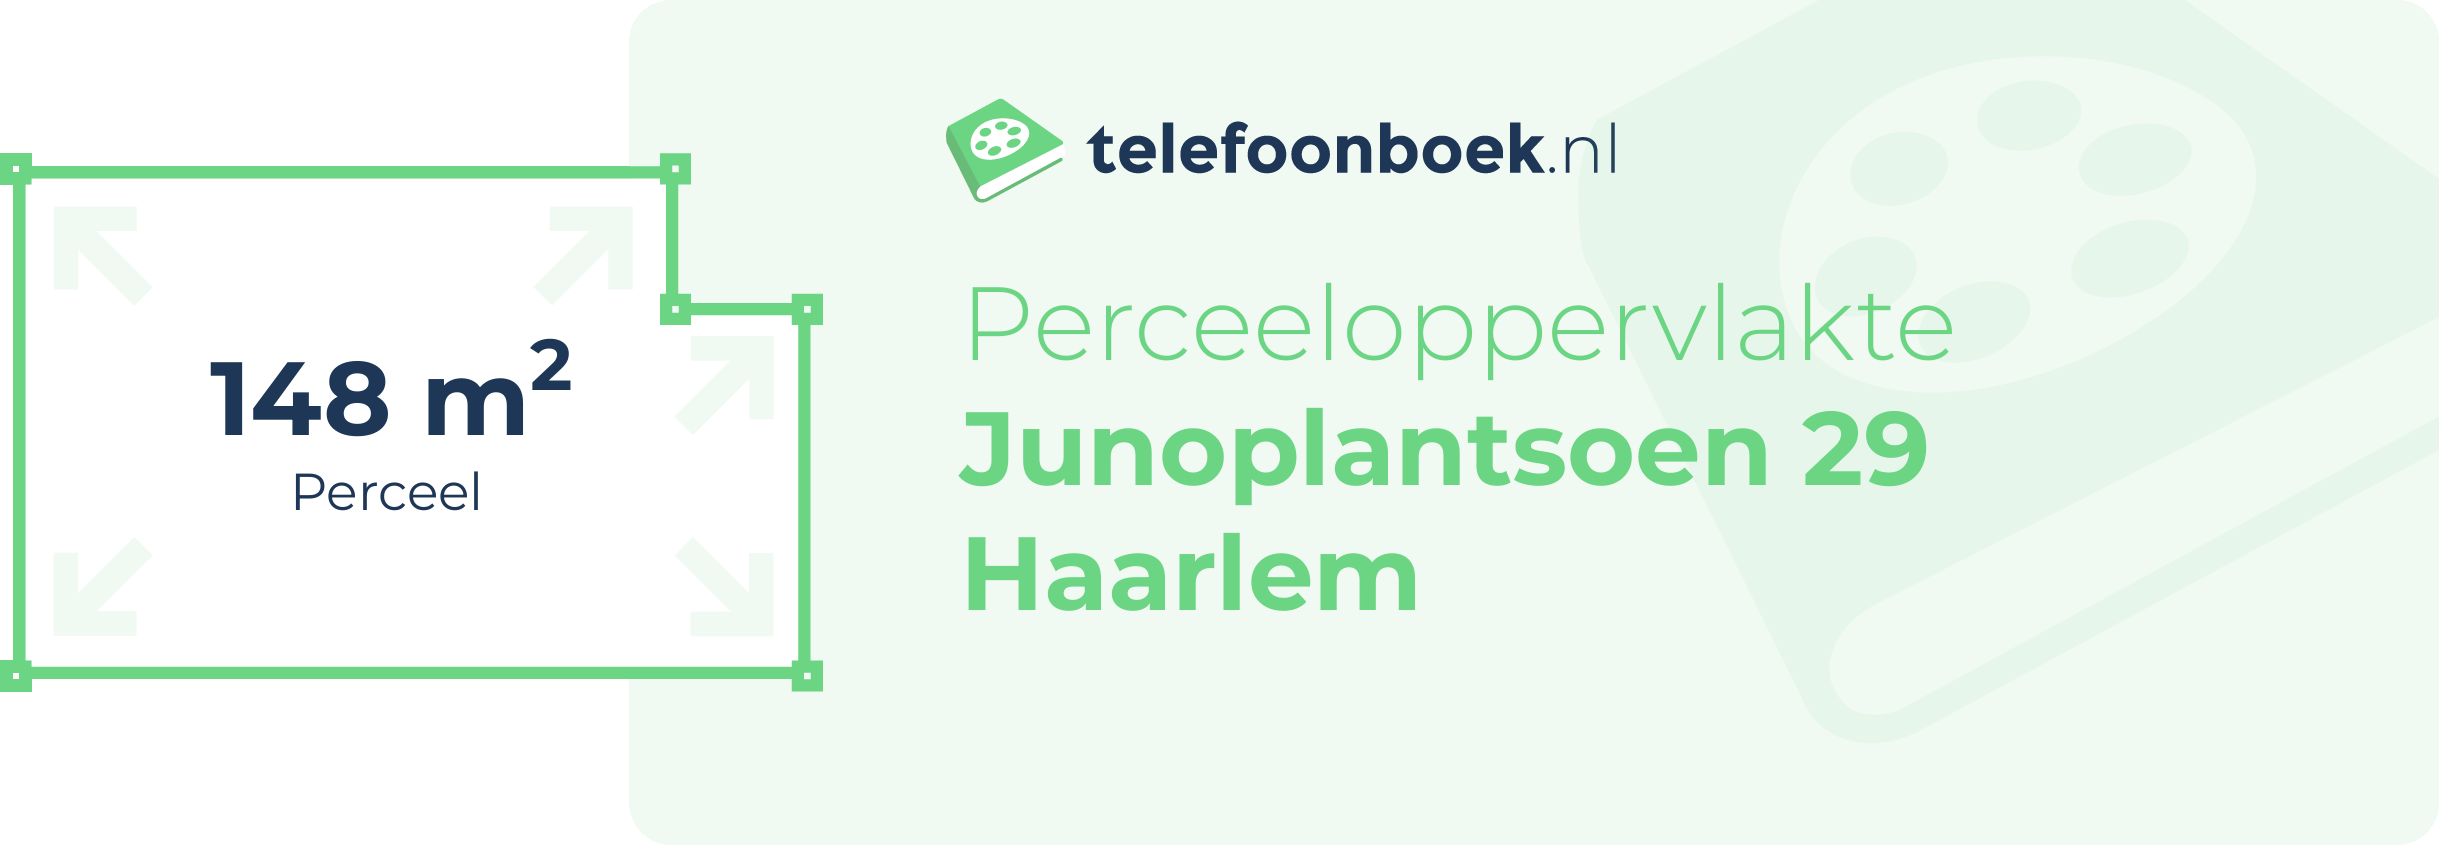 Perceeloppervlakte Junoplantsoen 29 Haarlem